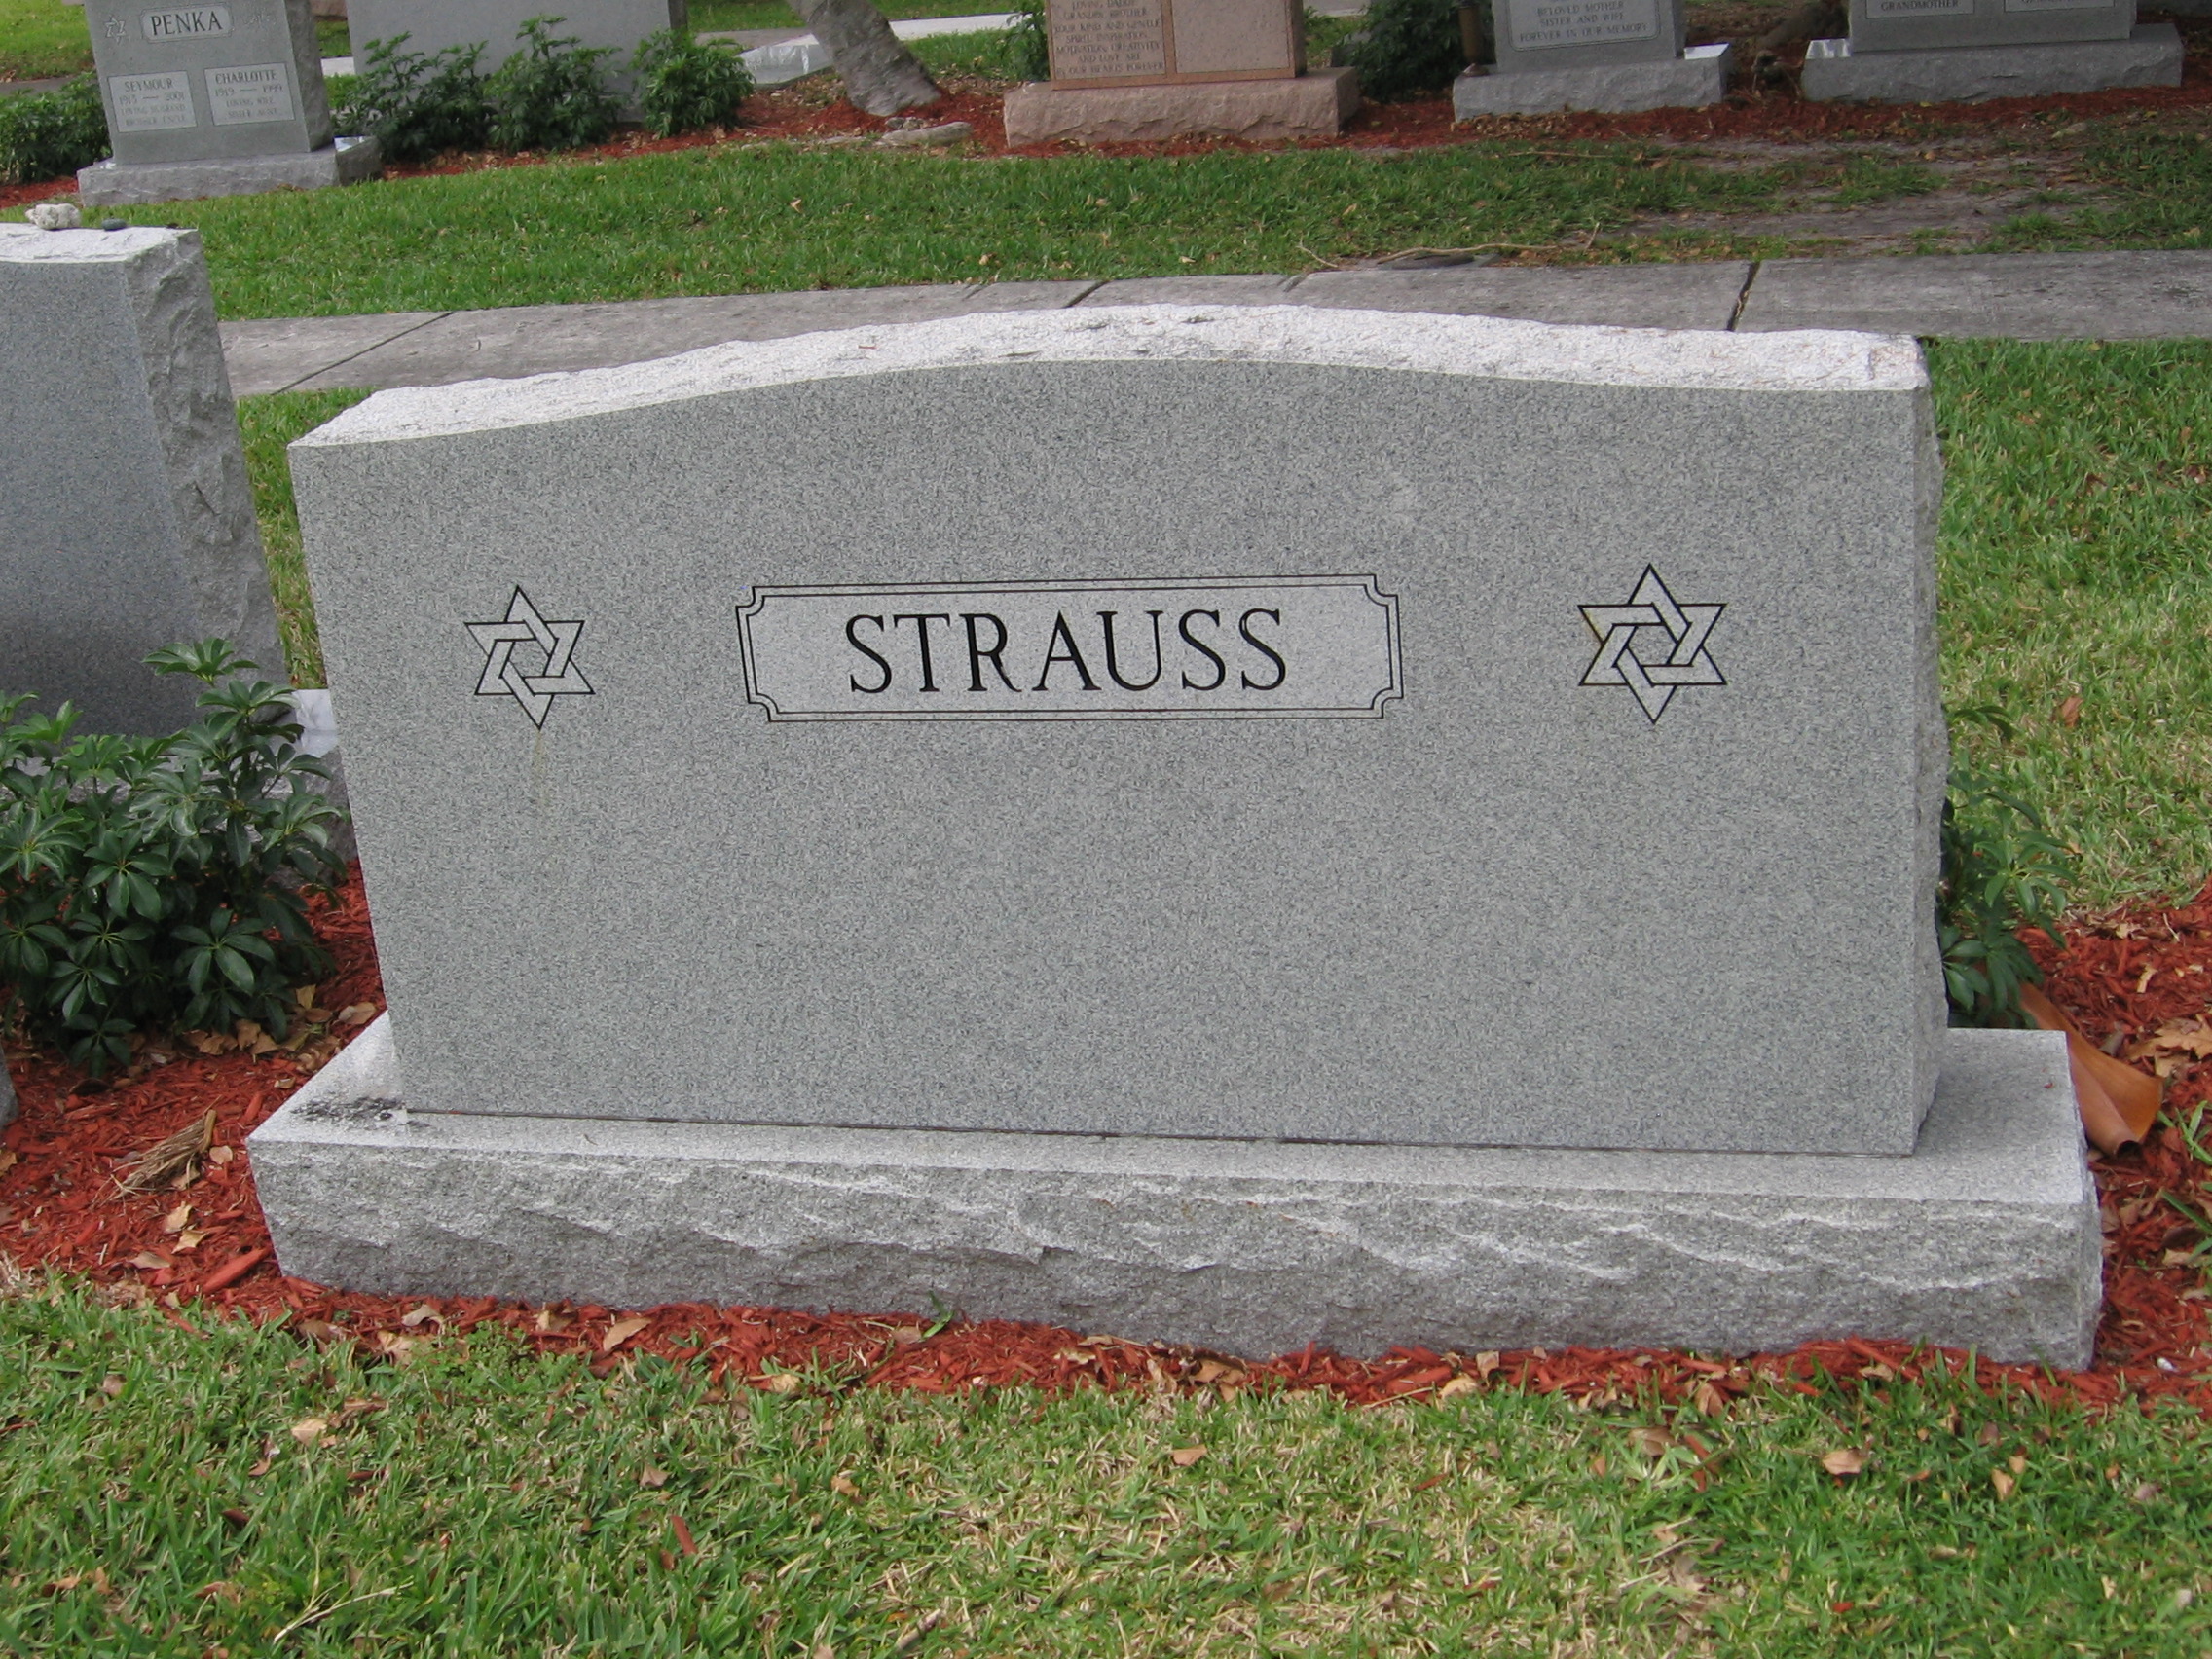 Harold Strauss